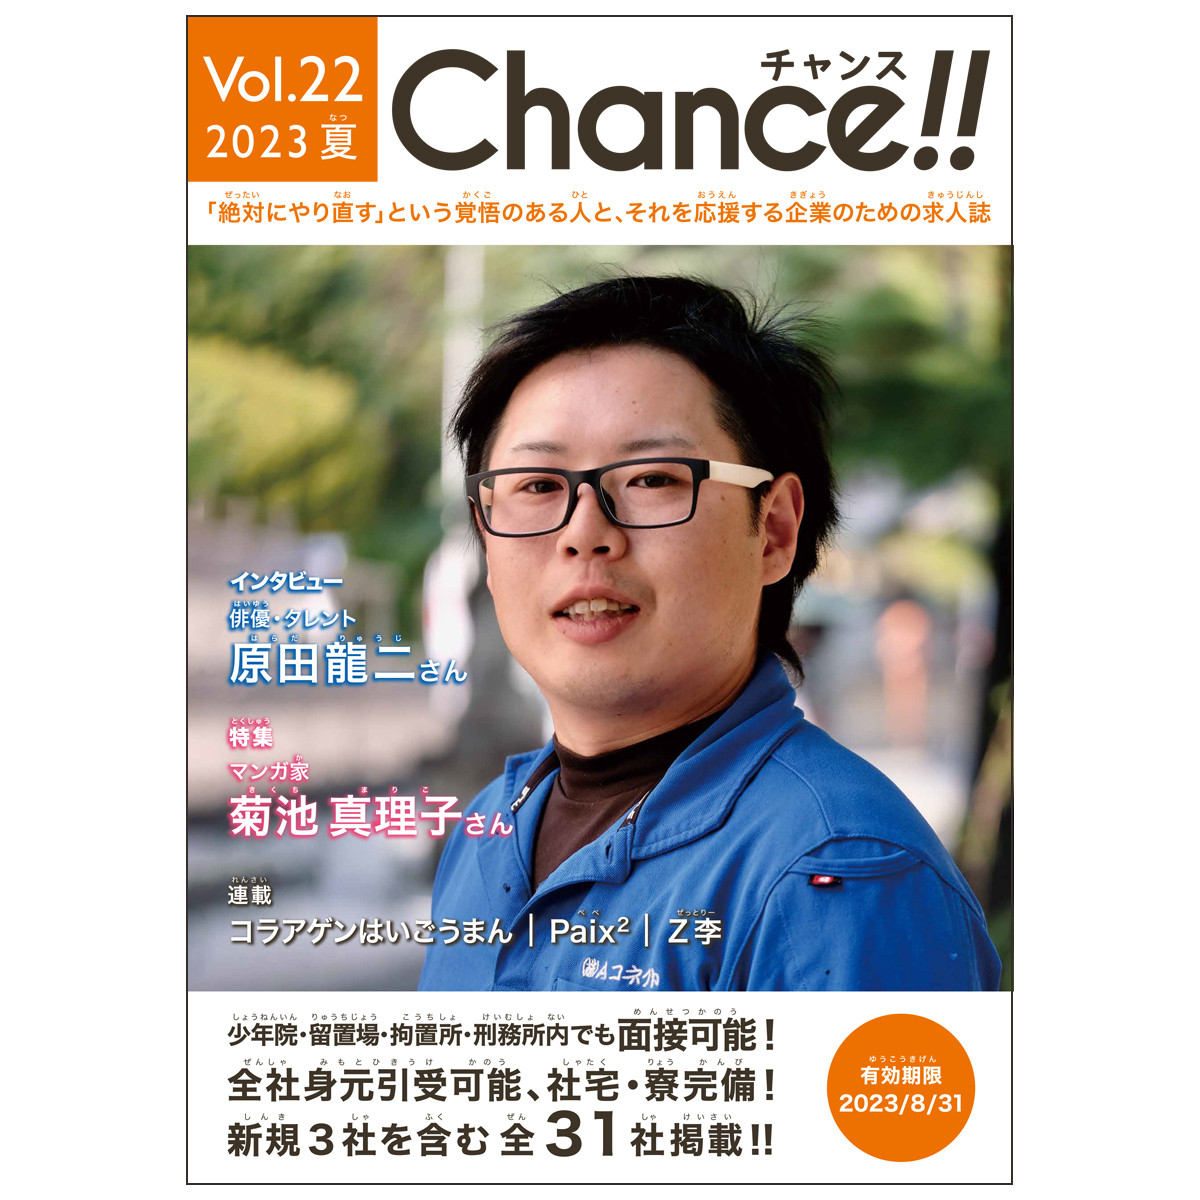 N@EYpluChance!! Vol.22 čv61s@΂ɂ蒼IƂôlɁg`XhI